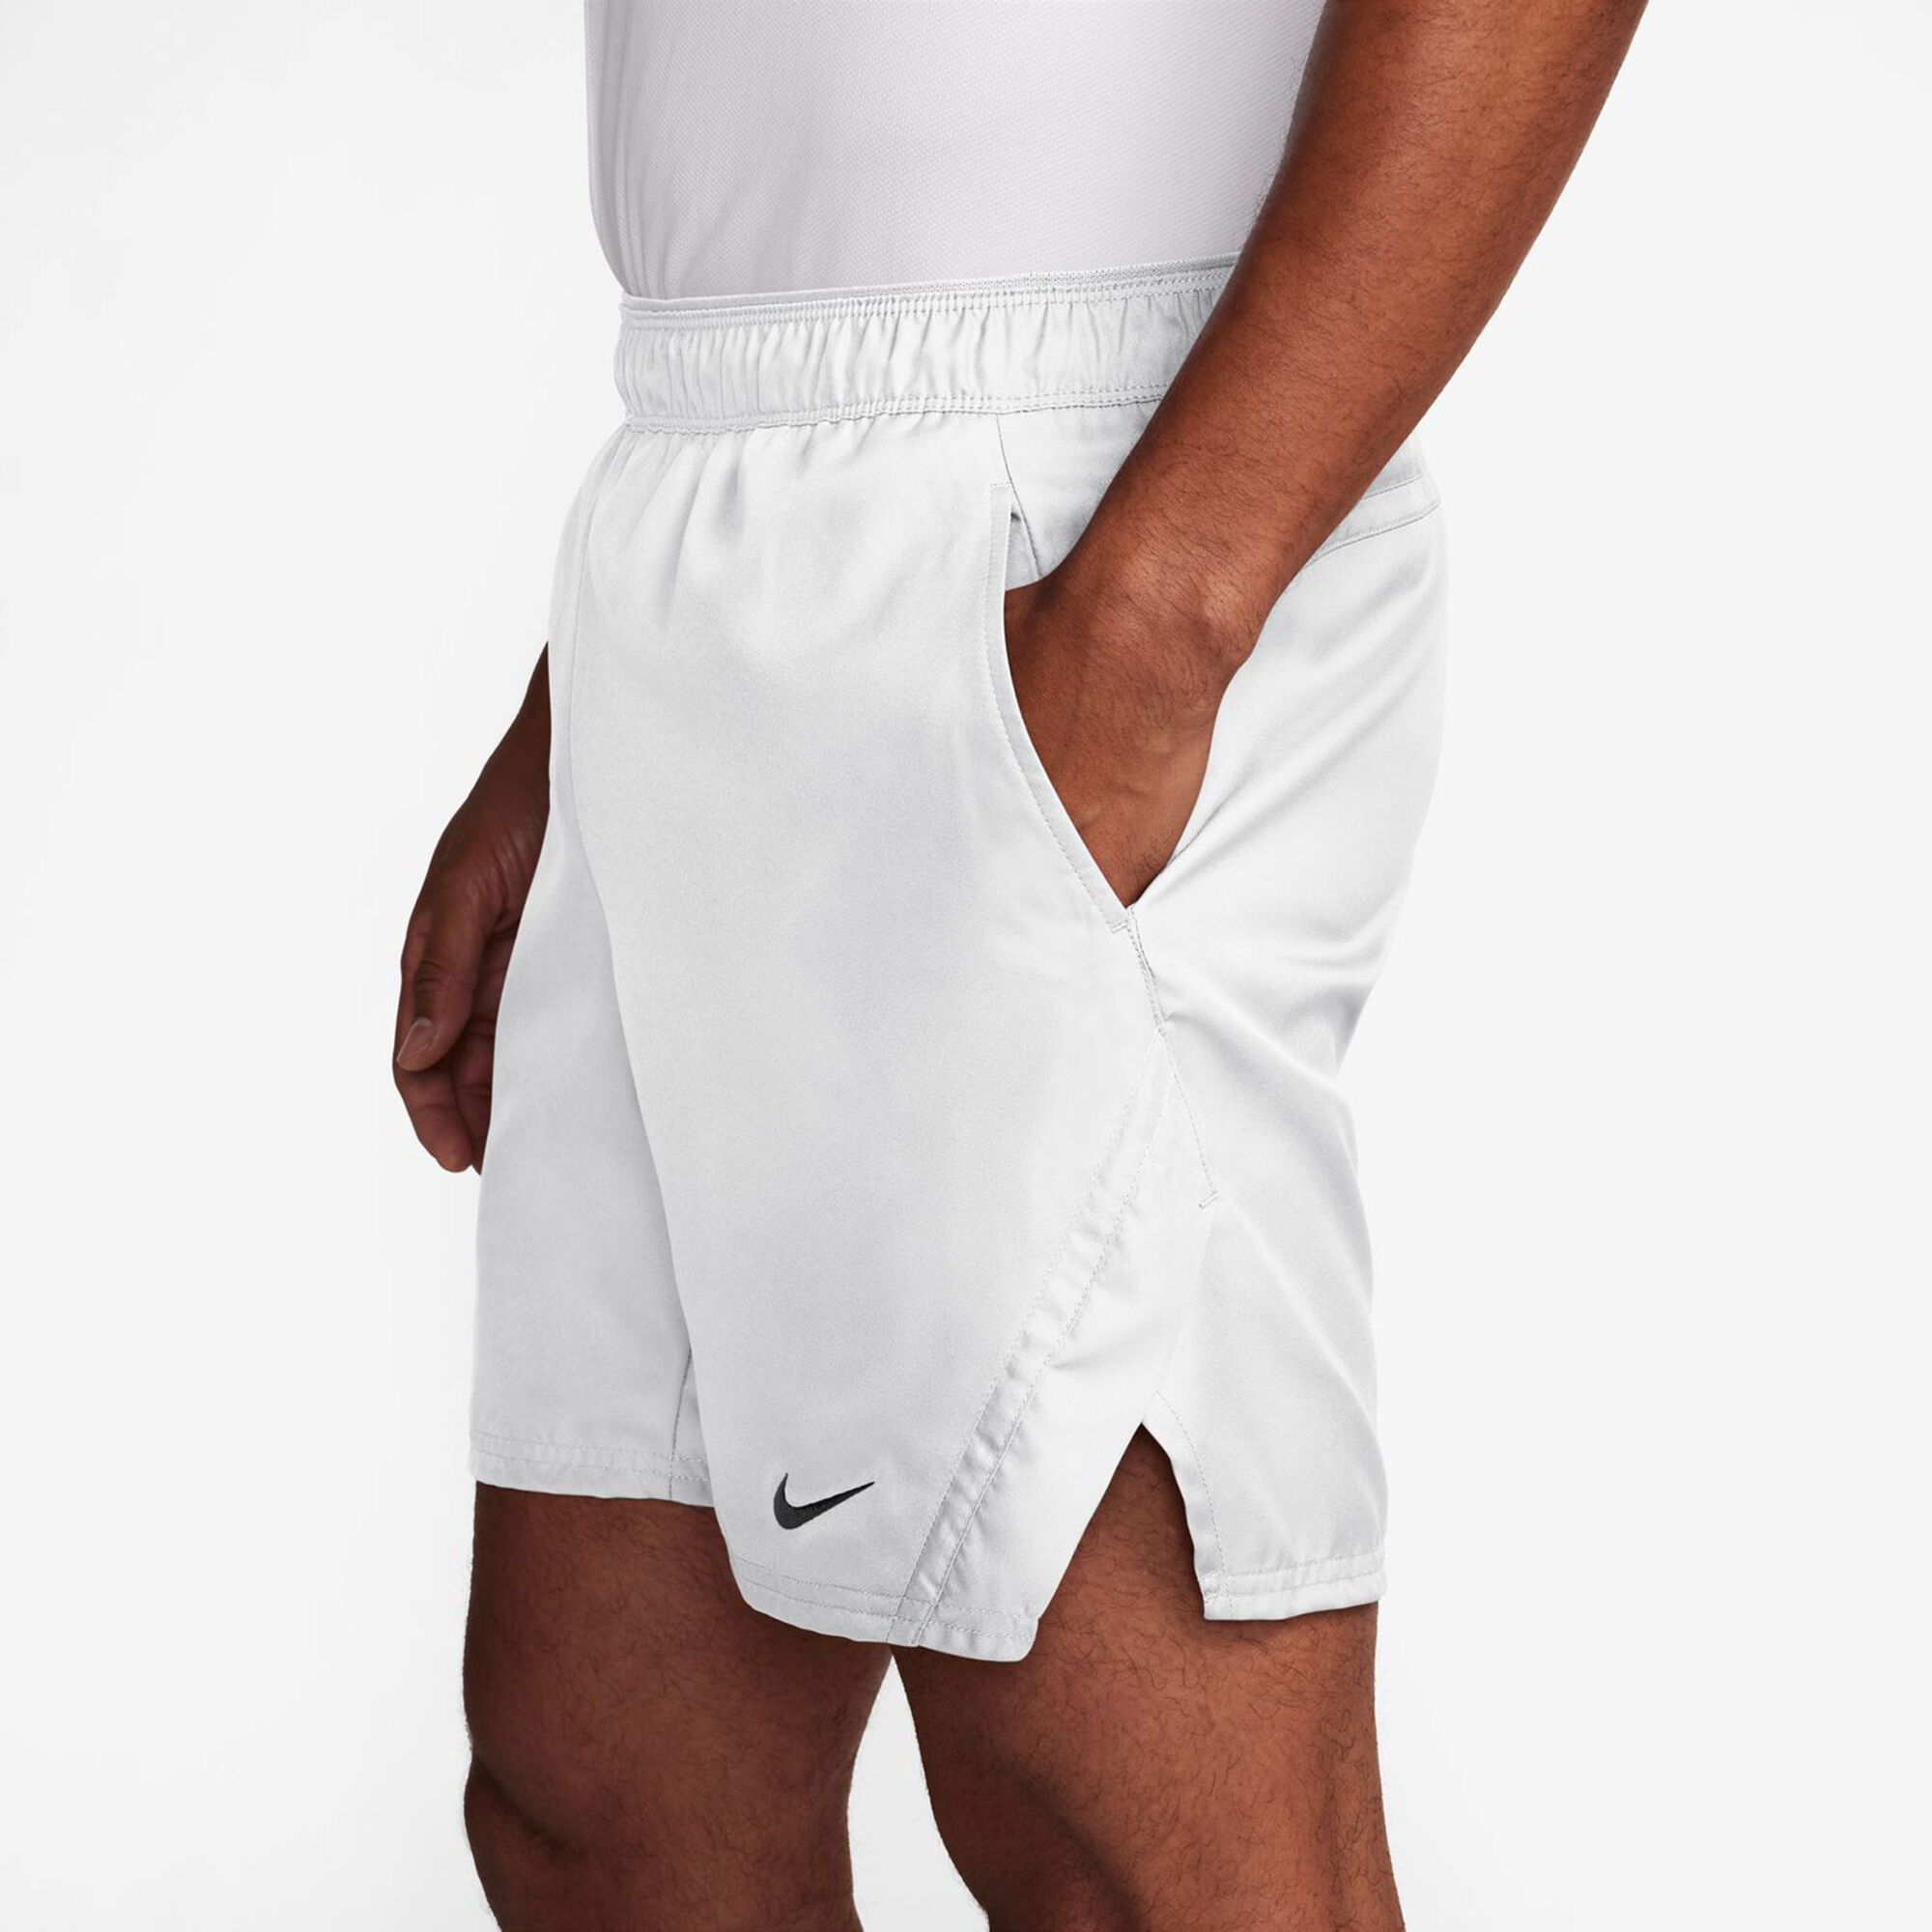 Buy Nike Dri-Fit Victory 7in Shorts Men Black online